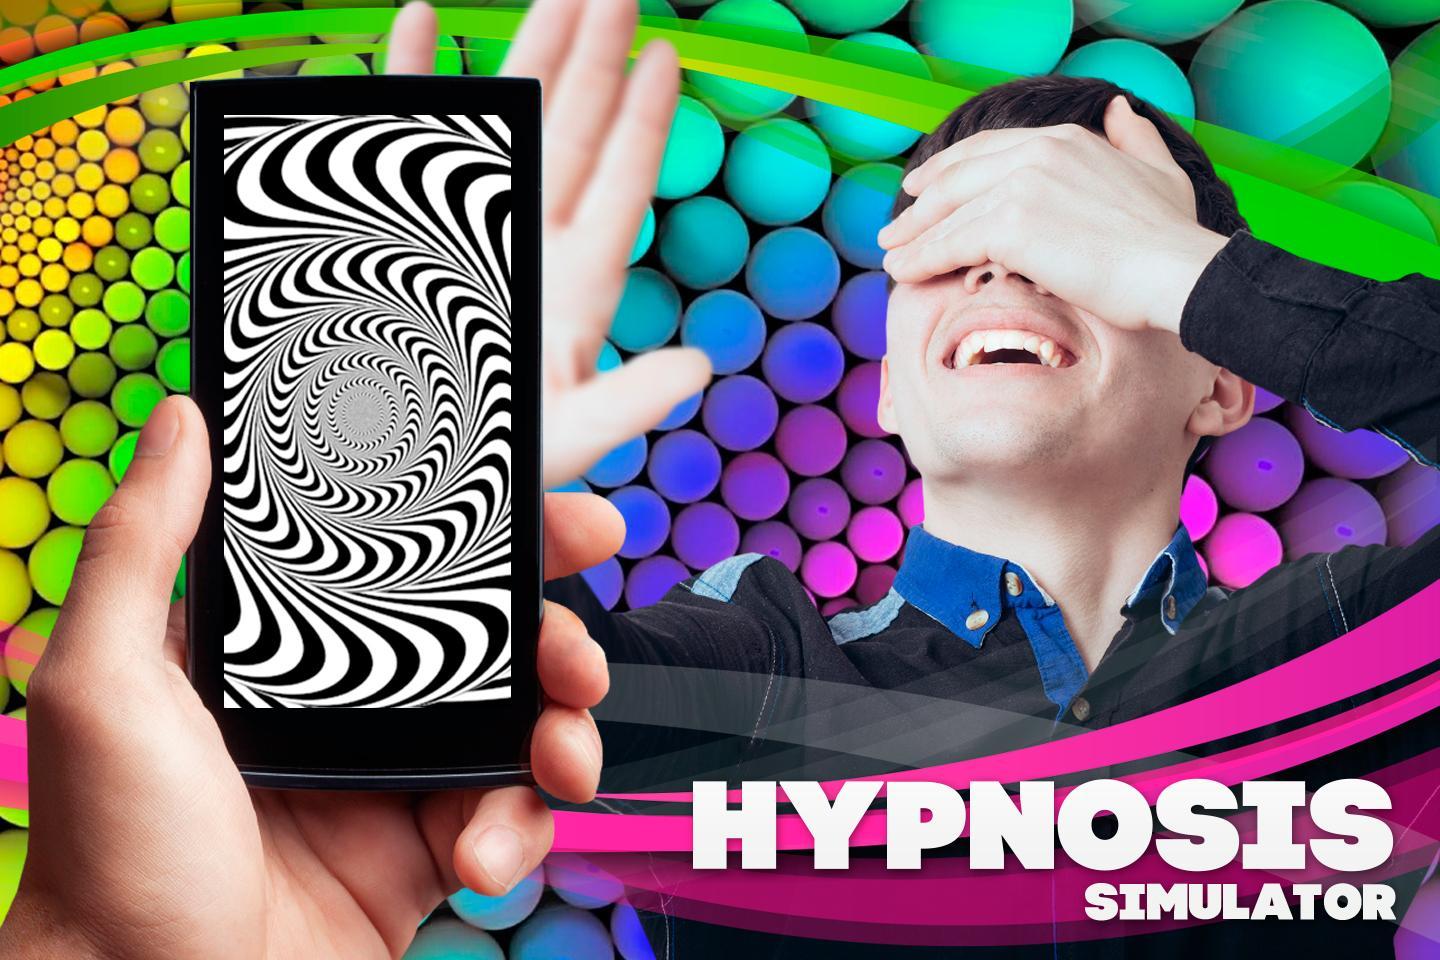 Uncle hypnosis. Гипноз в рекламе. Постер "гипноз". Иллюзия симуляция. Симулятор гипноза игра.